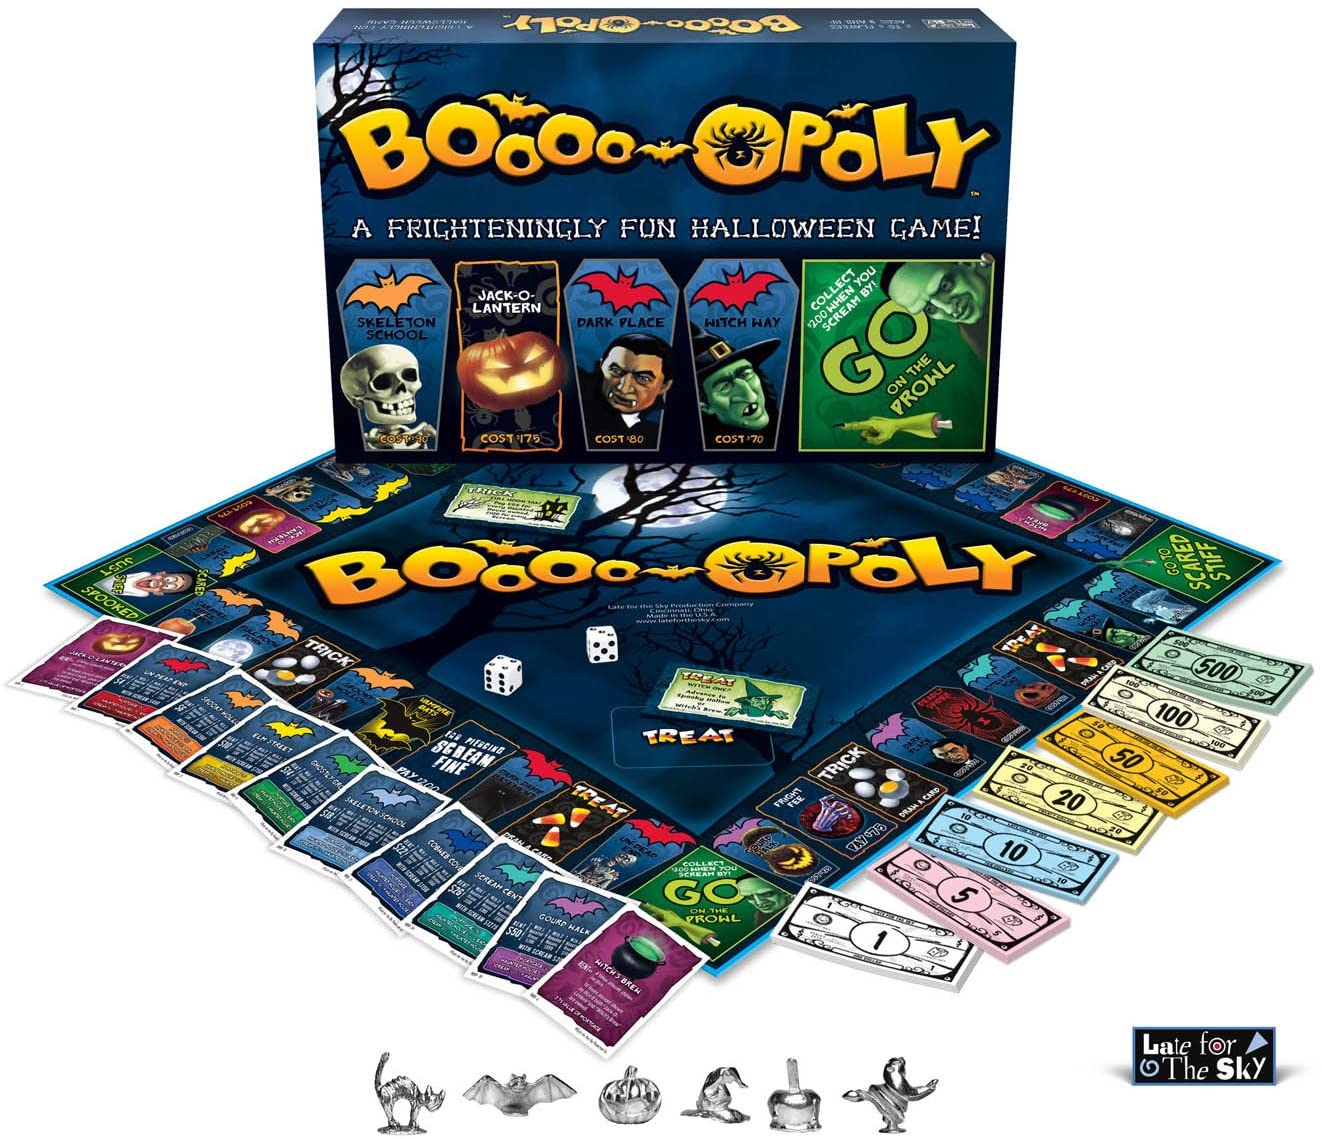 Boo-Opoly